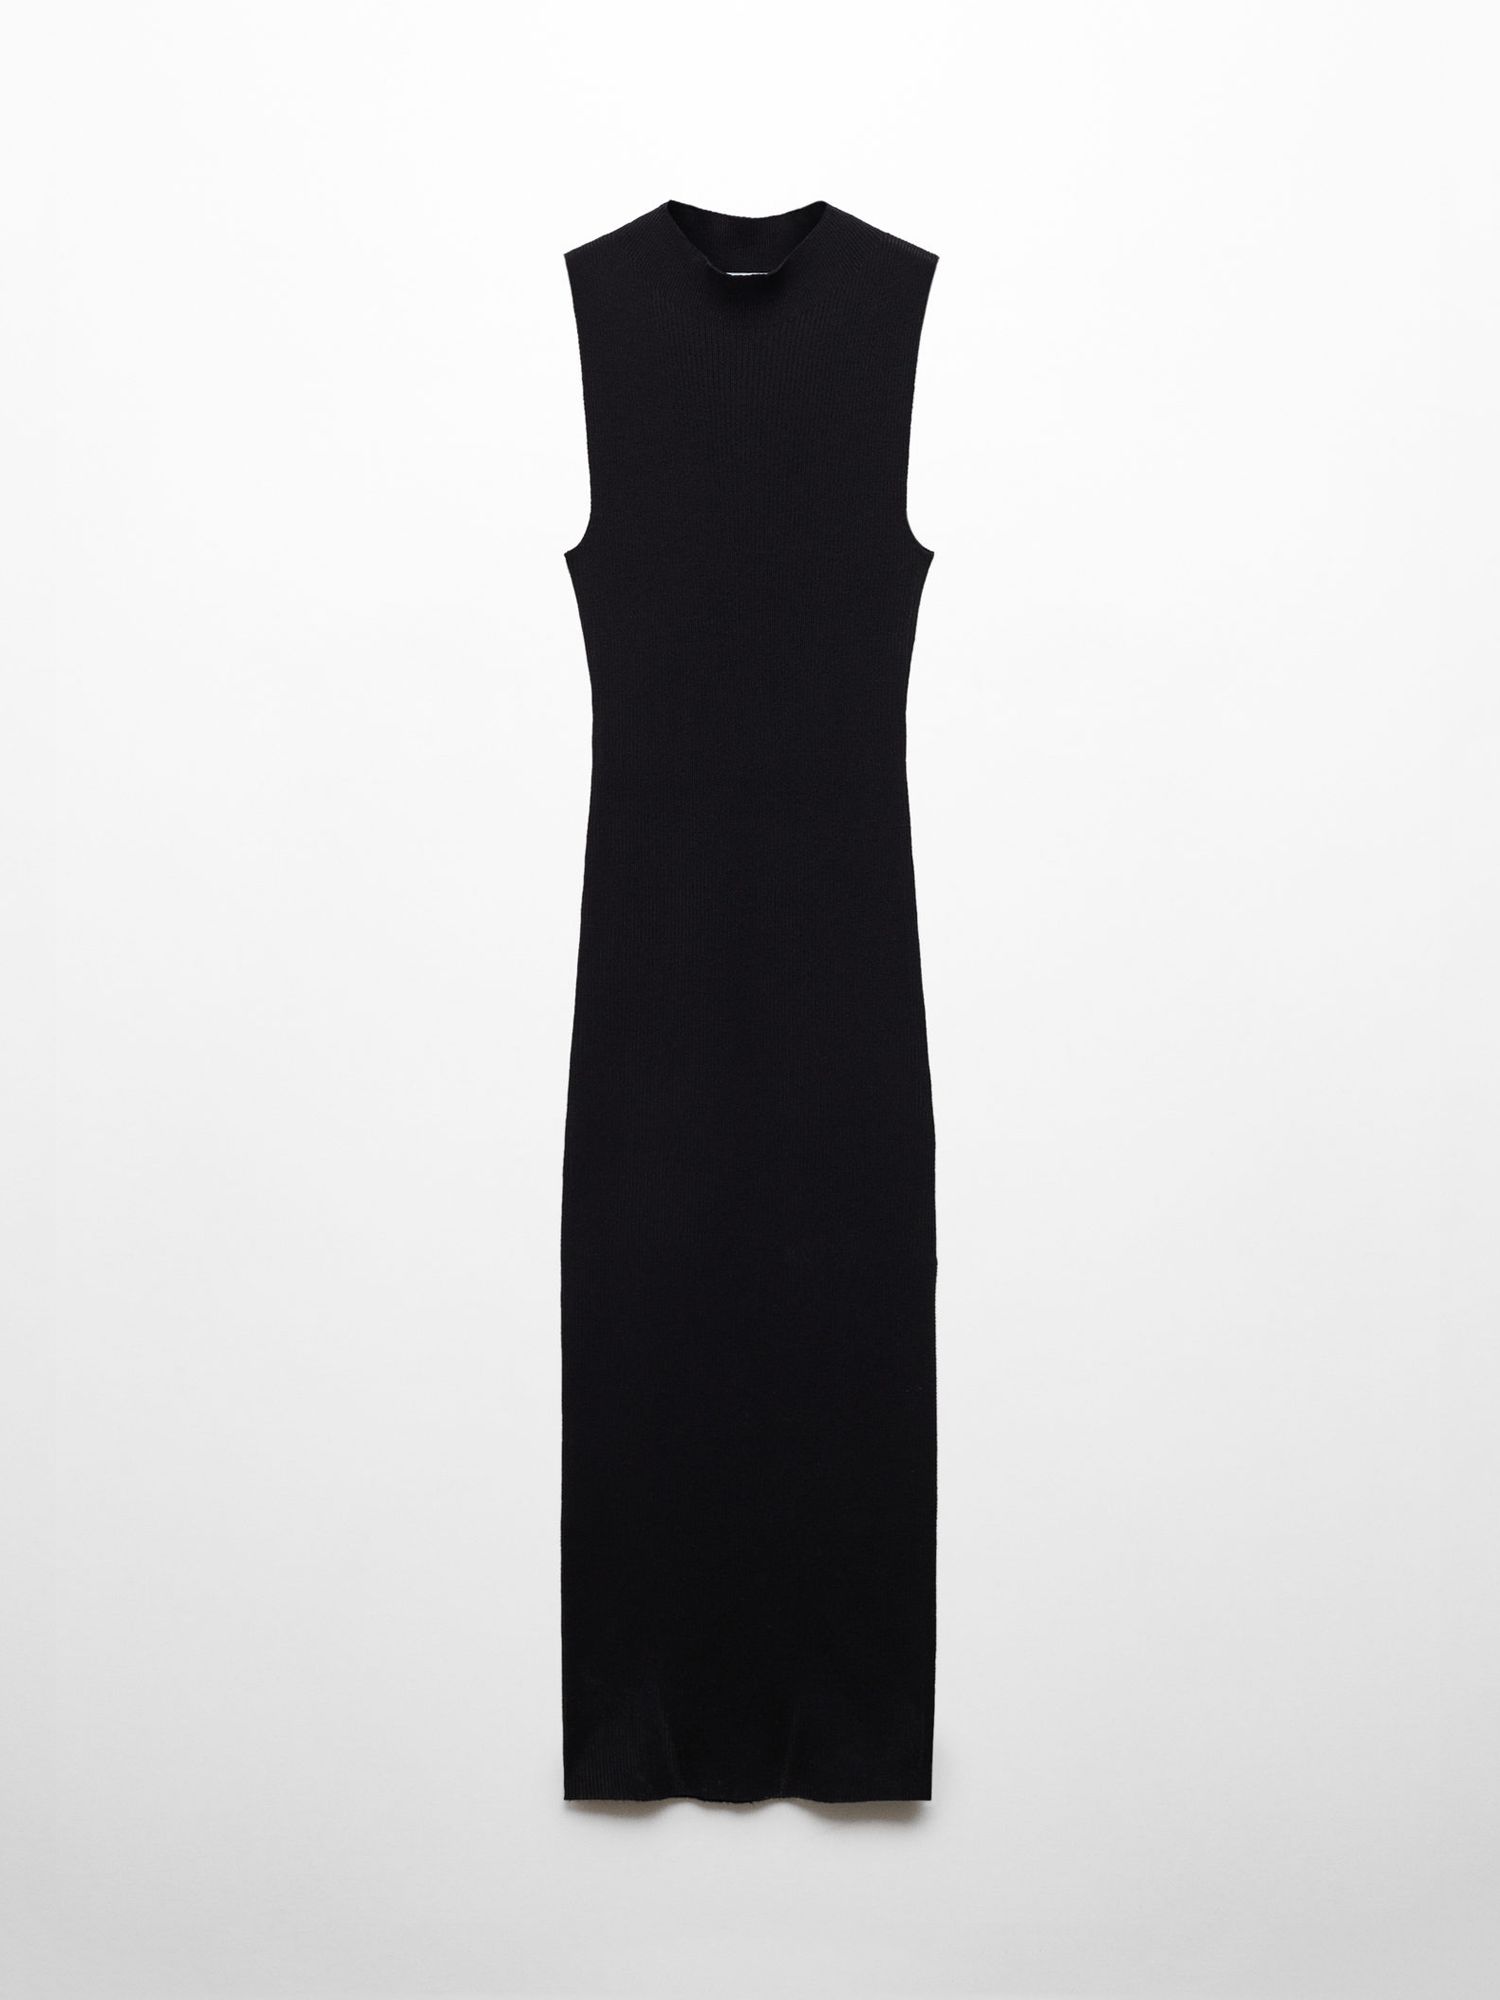 Buy Mango Perez Ribbed Knit Dress, Black Online at johnlewis.com